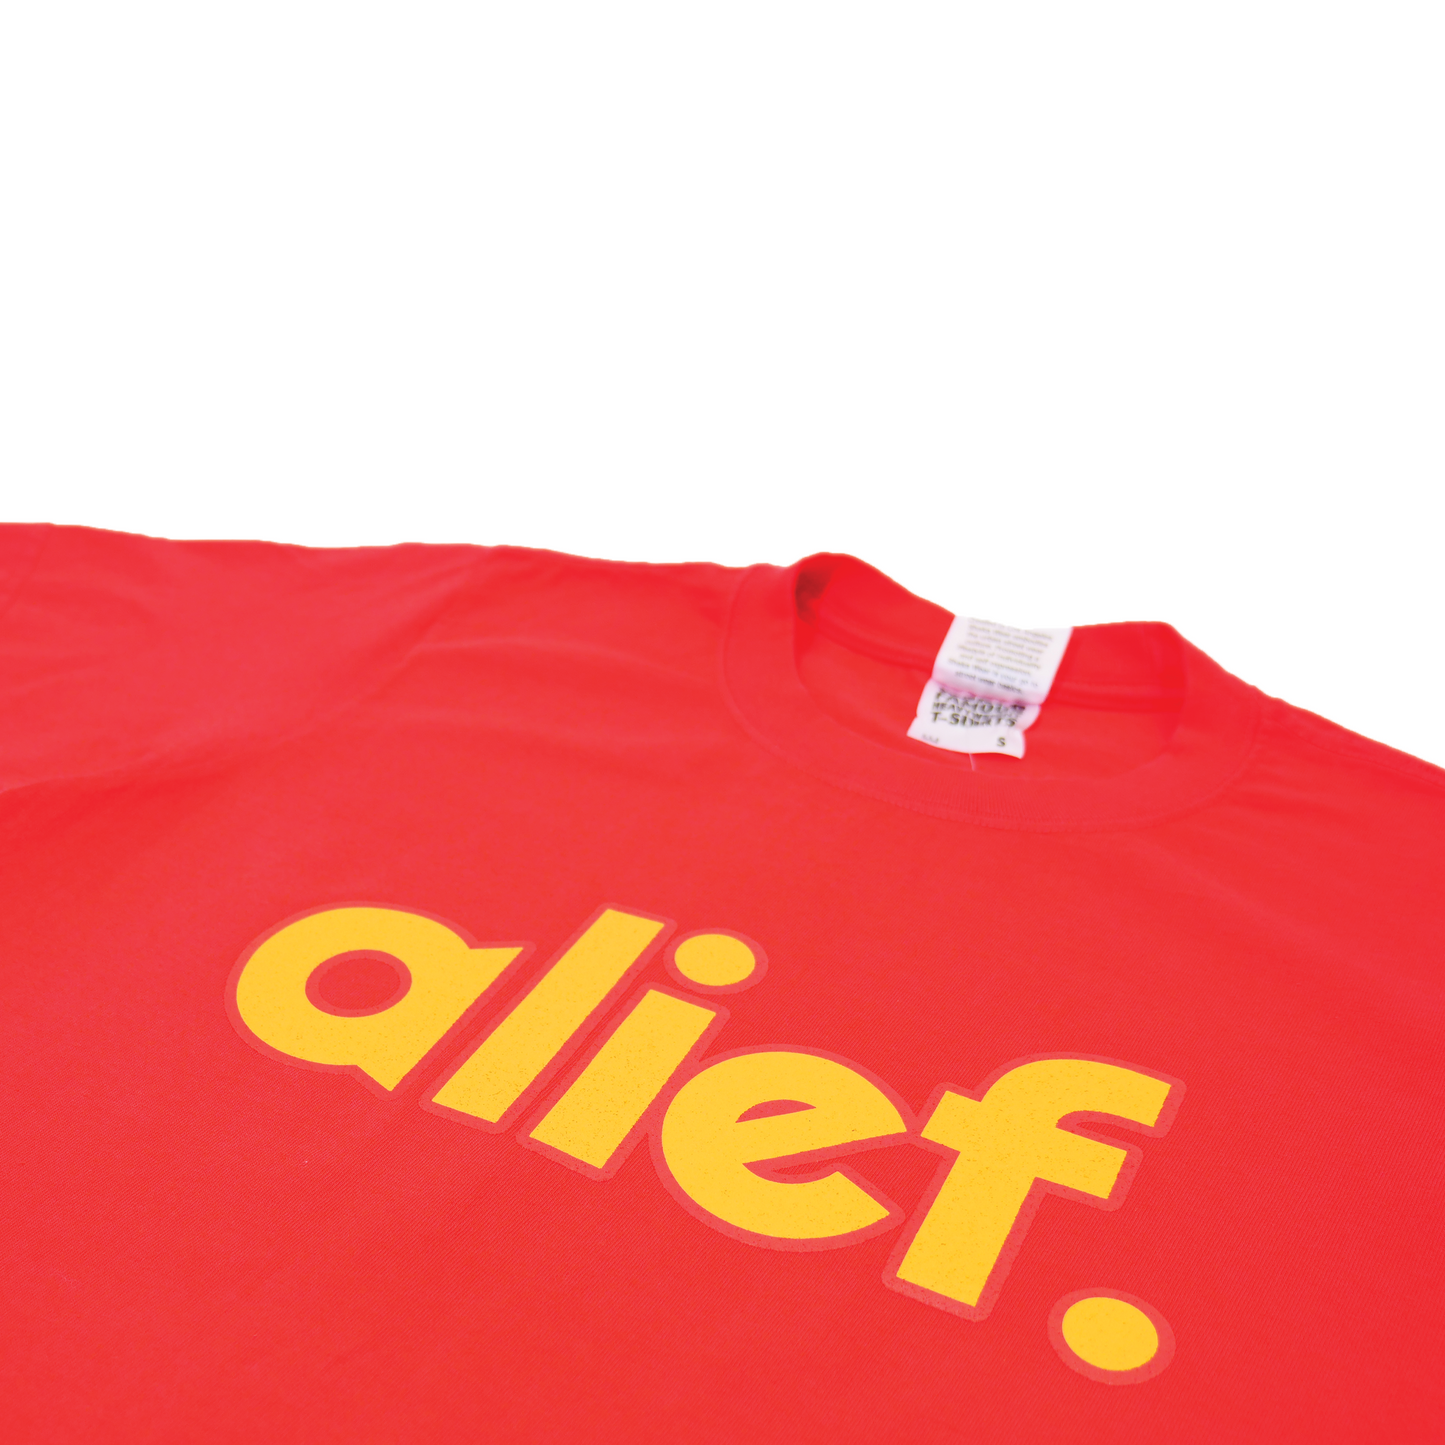 Worldwide Champs Alief T-Shirt